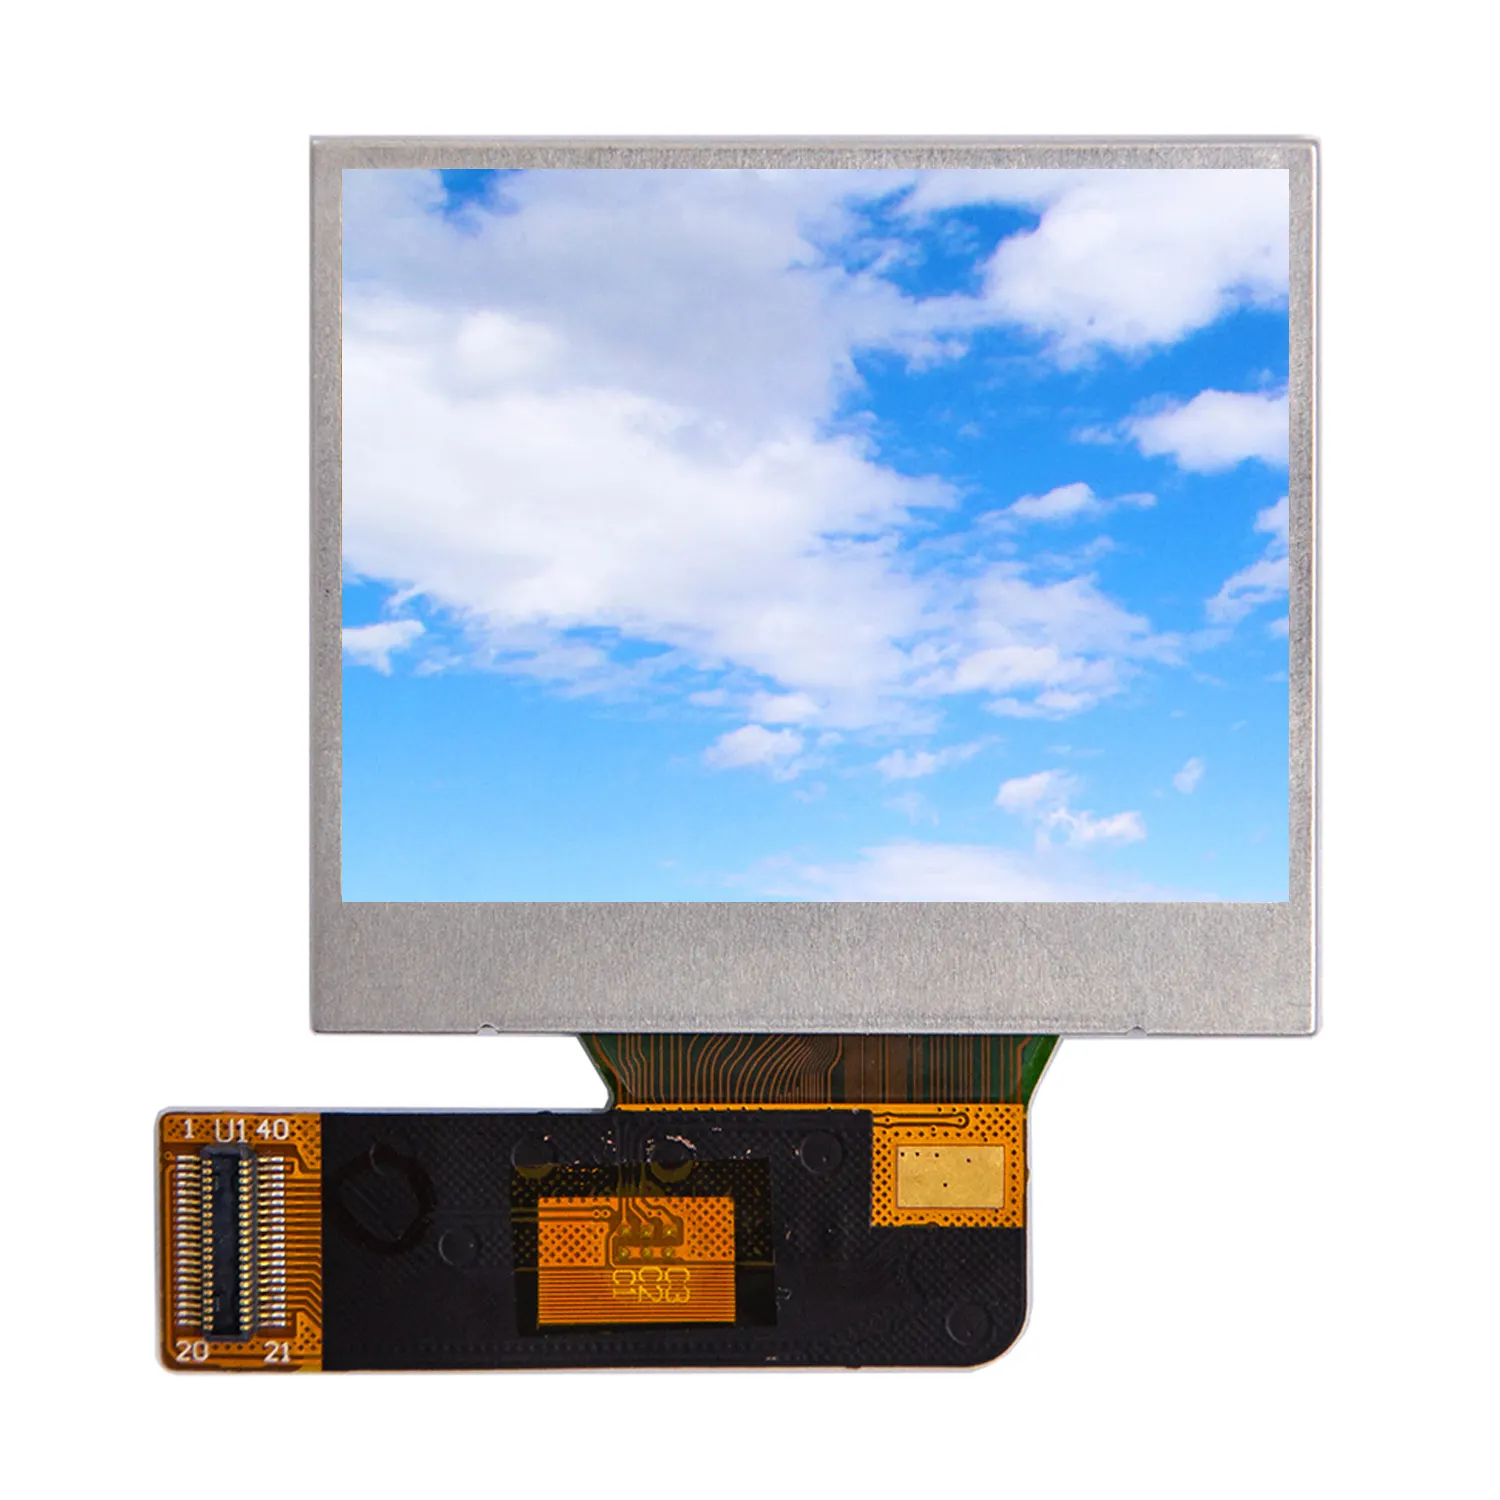 VIEWE2.0 дюймовый ЖК-дисплей 480x(R.G.B)x360 TFT LCD, RGB 40PIN ЖК-экран